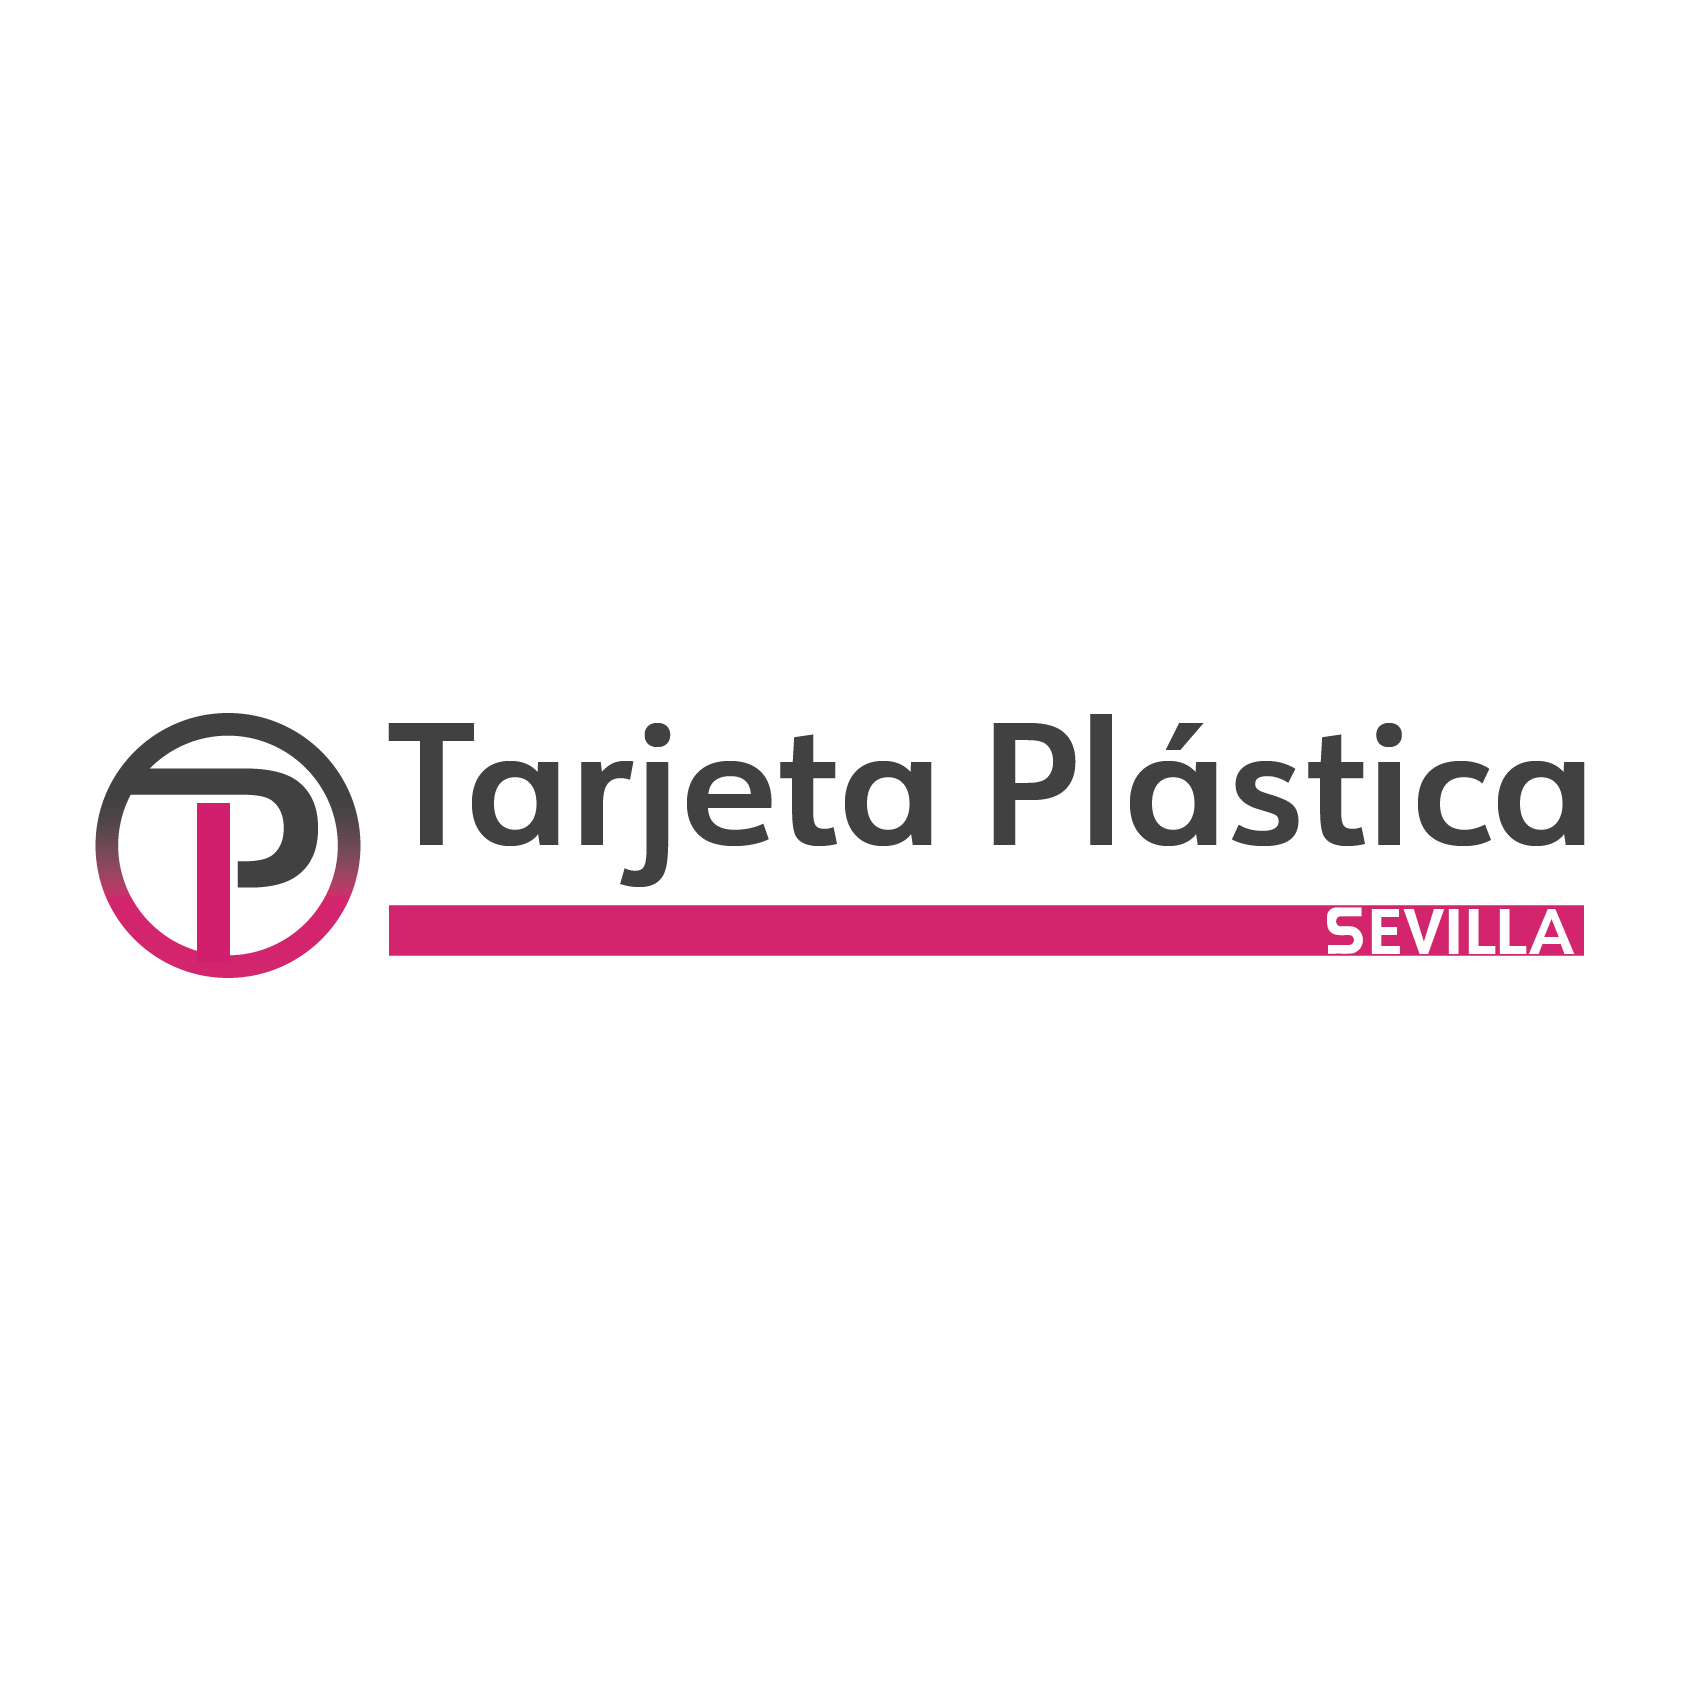 Tarjeta Plástica Sevilla Logo